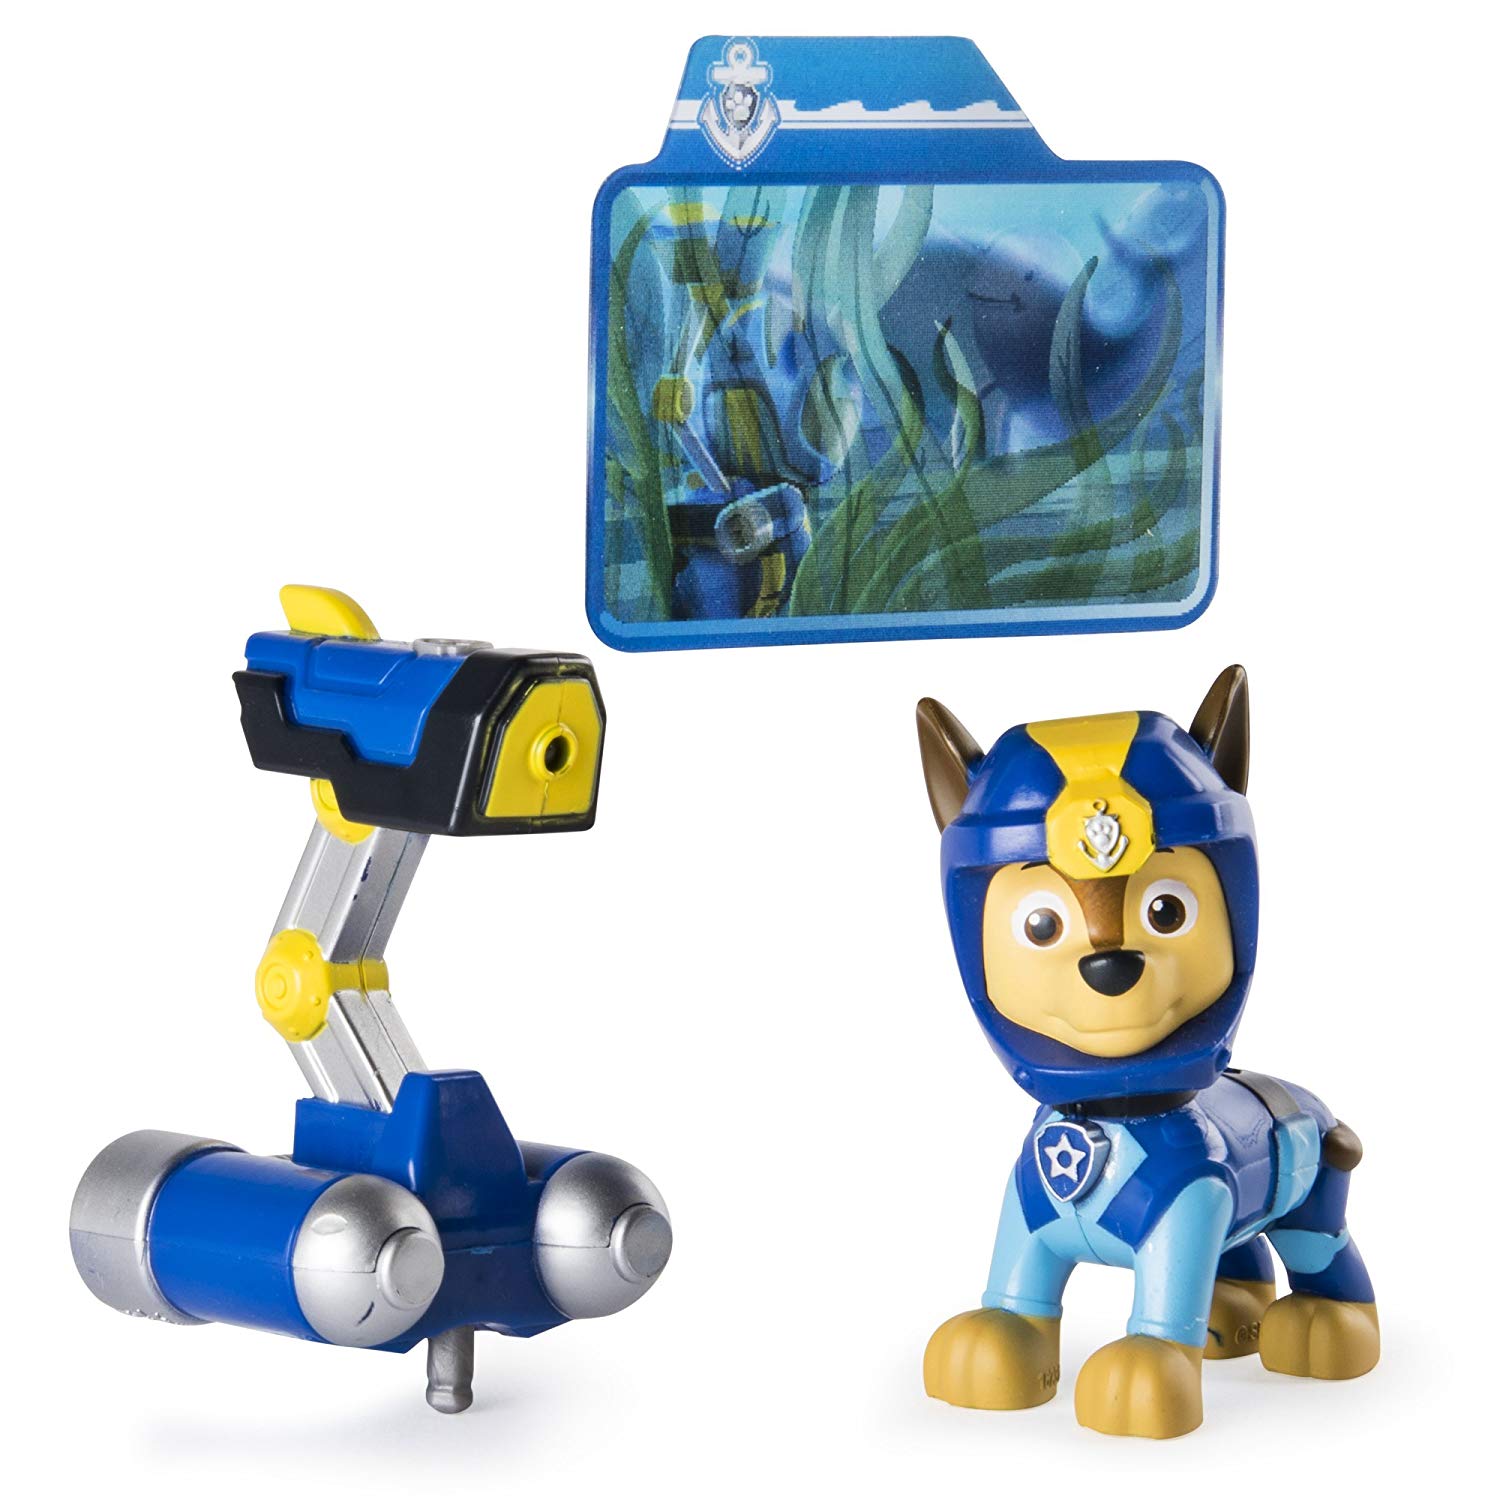 Paw Patrol Sea Patrol Toy Set – Only $6.98!